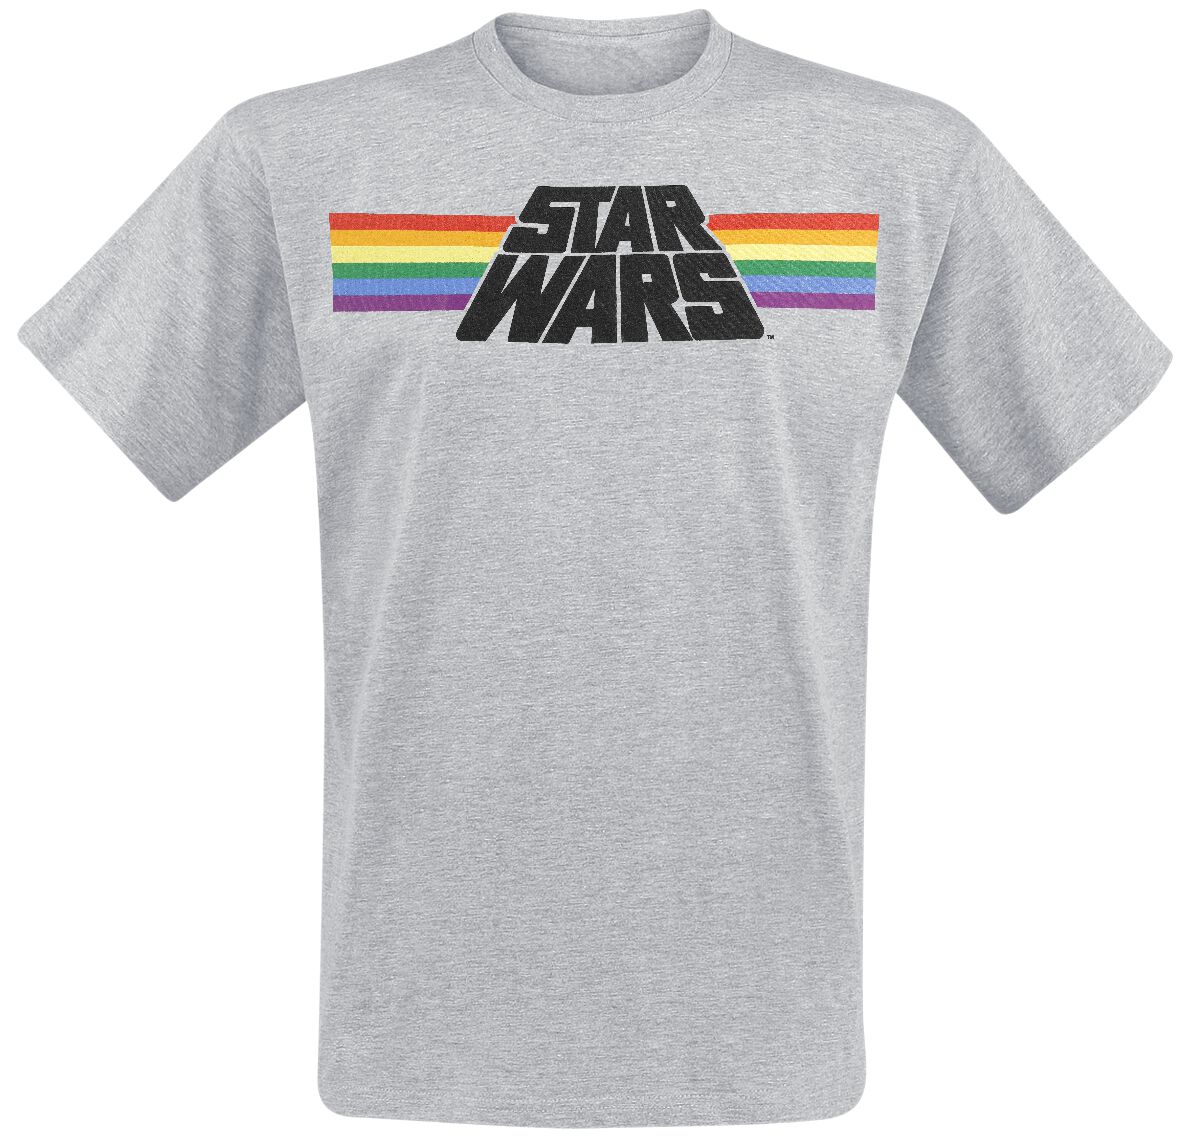 Star Wars Classic Rainbow T-Shirt grau meliert in M